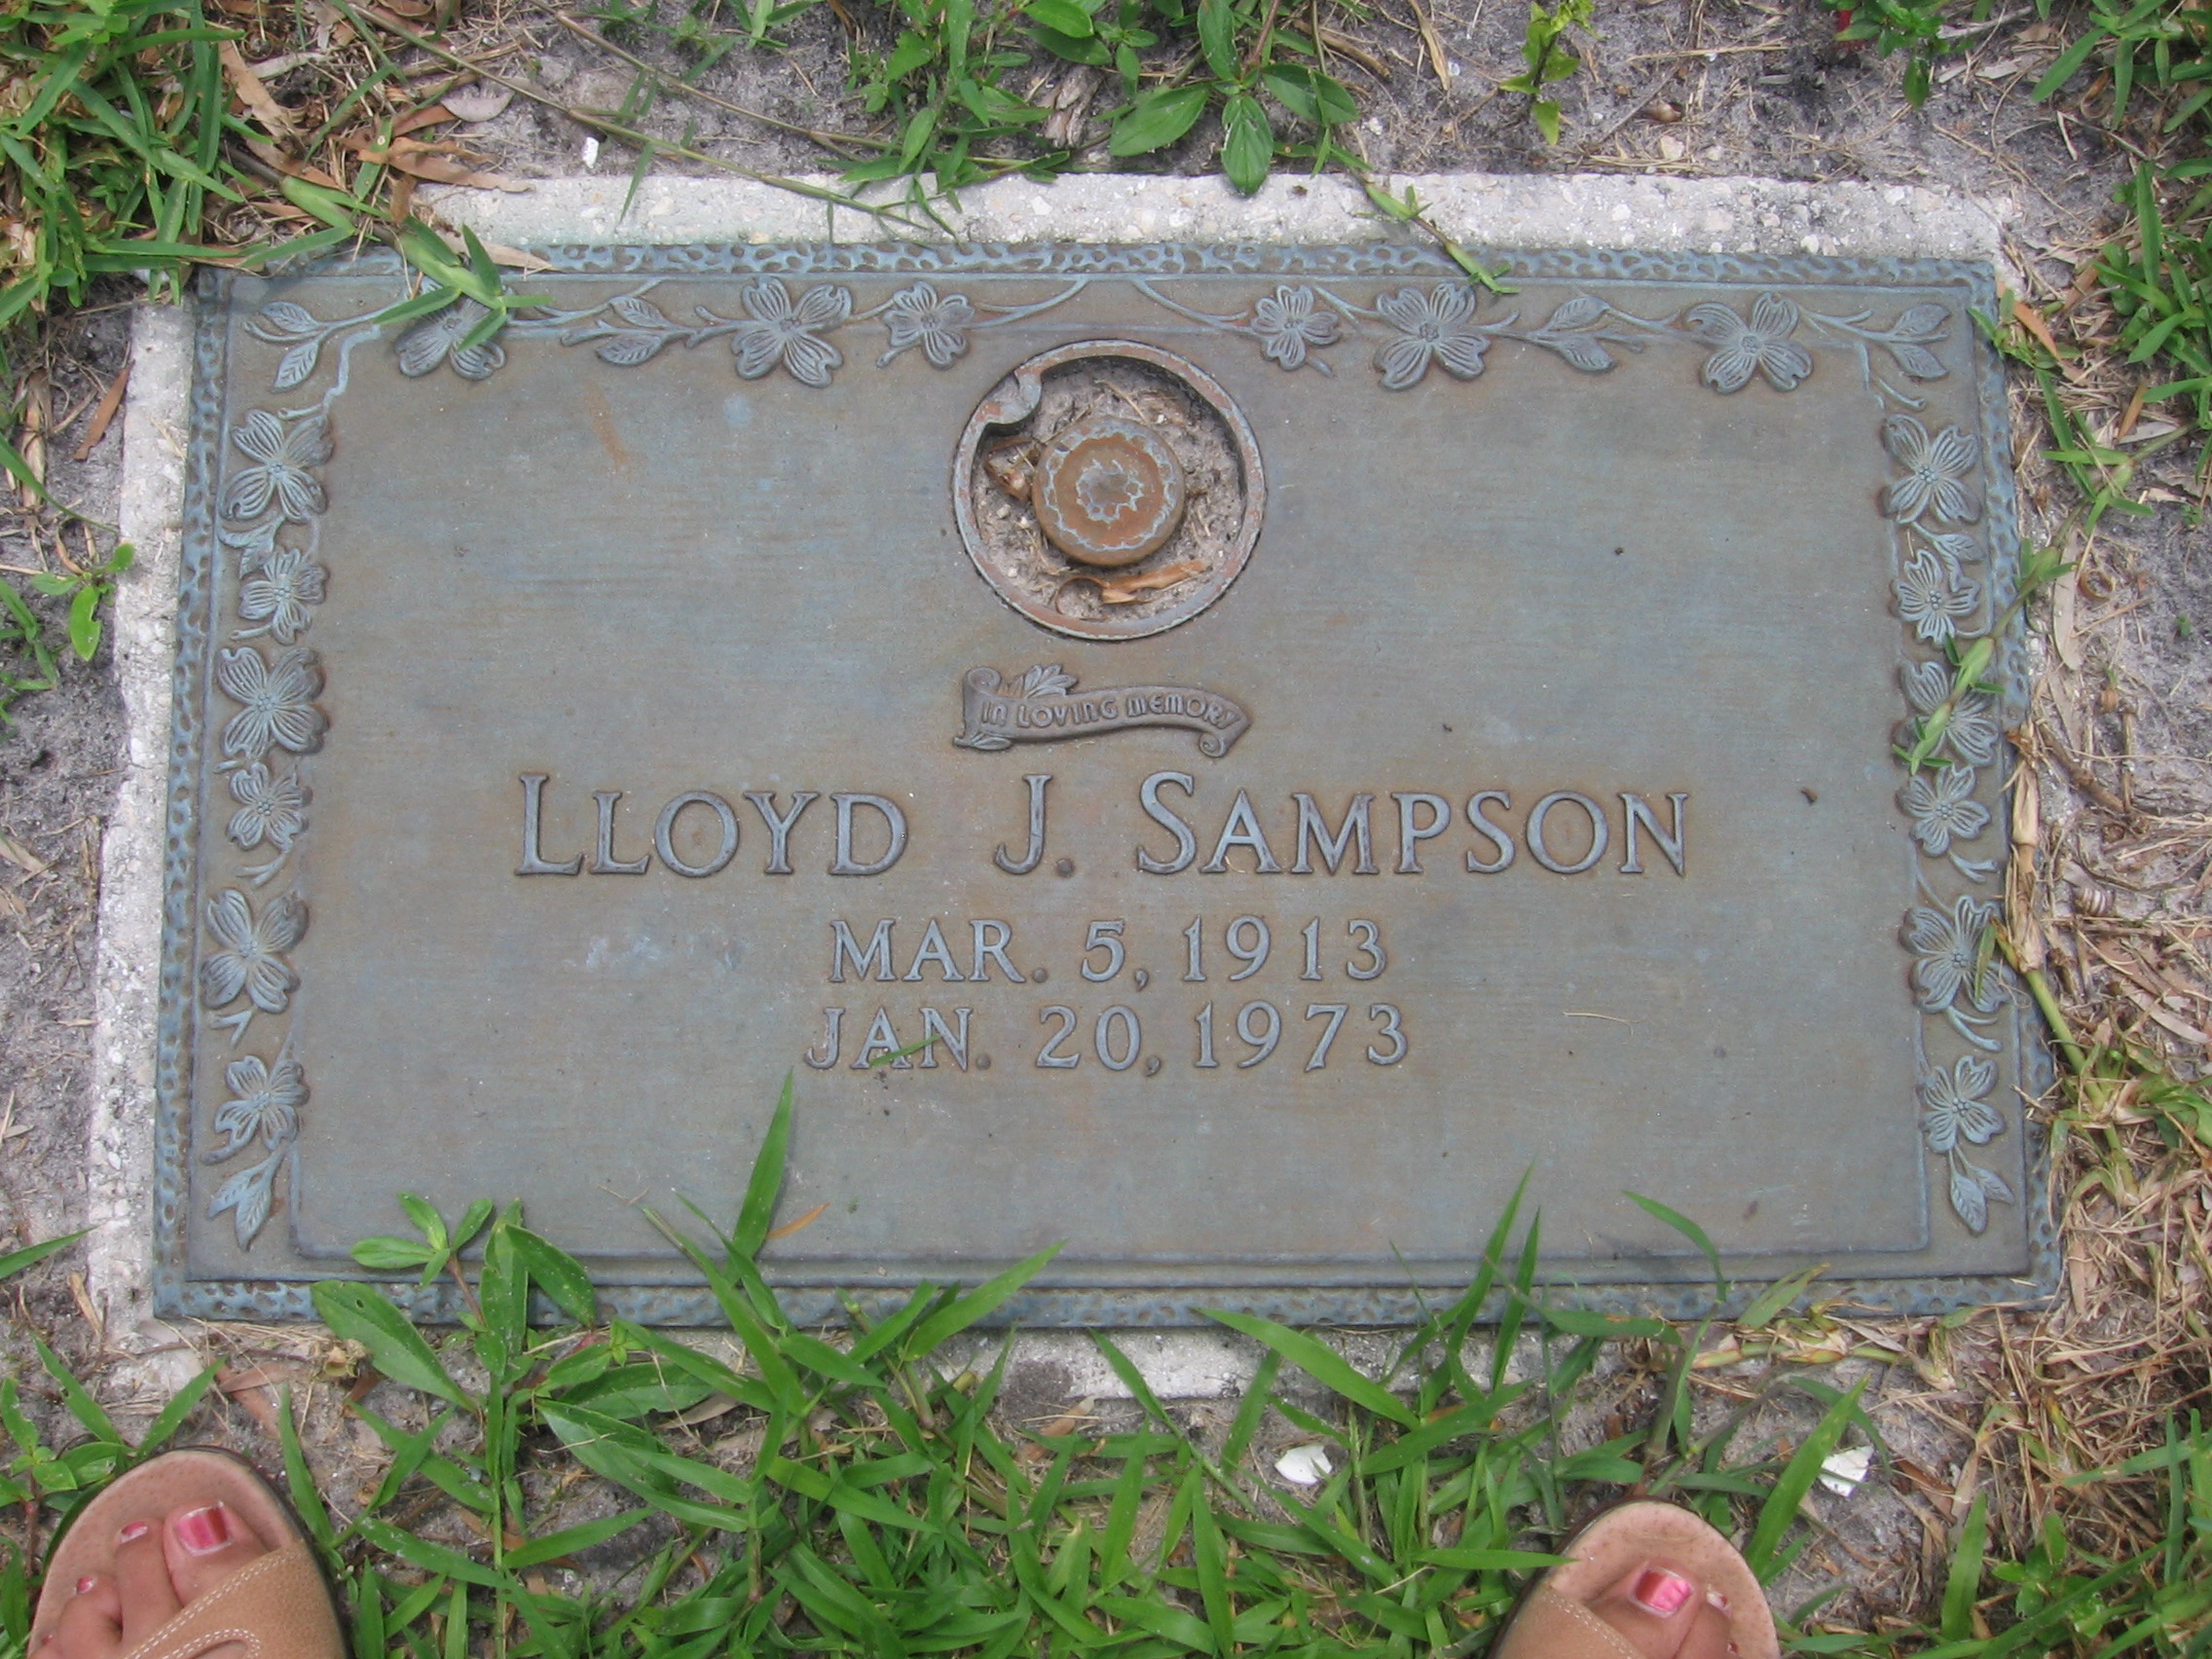 Lloyd J Sampson